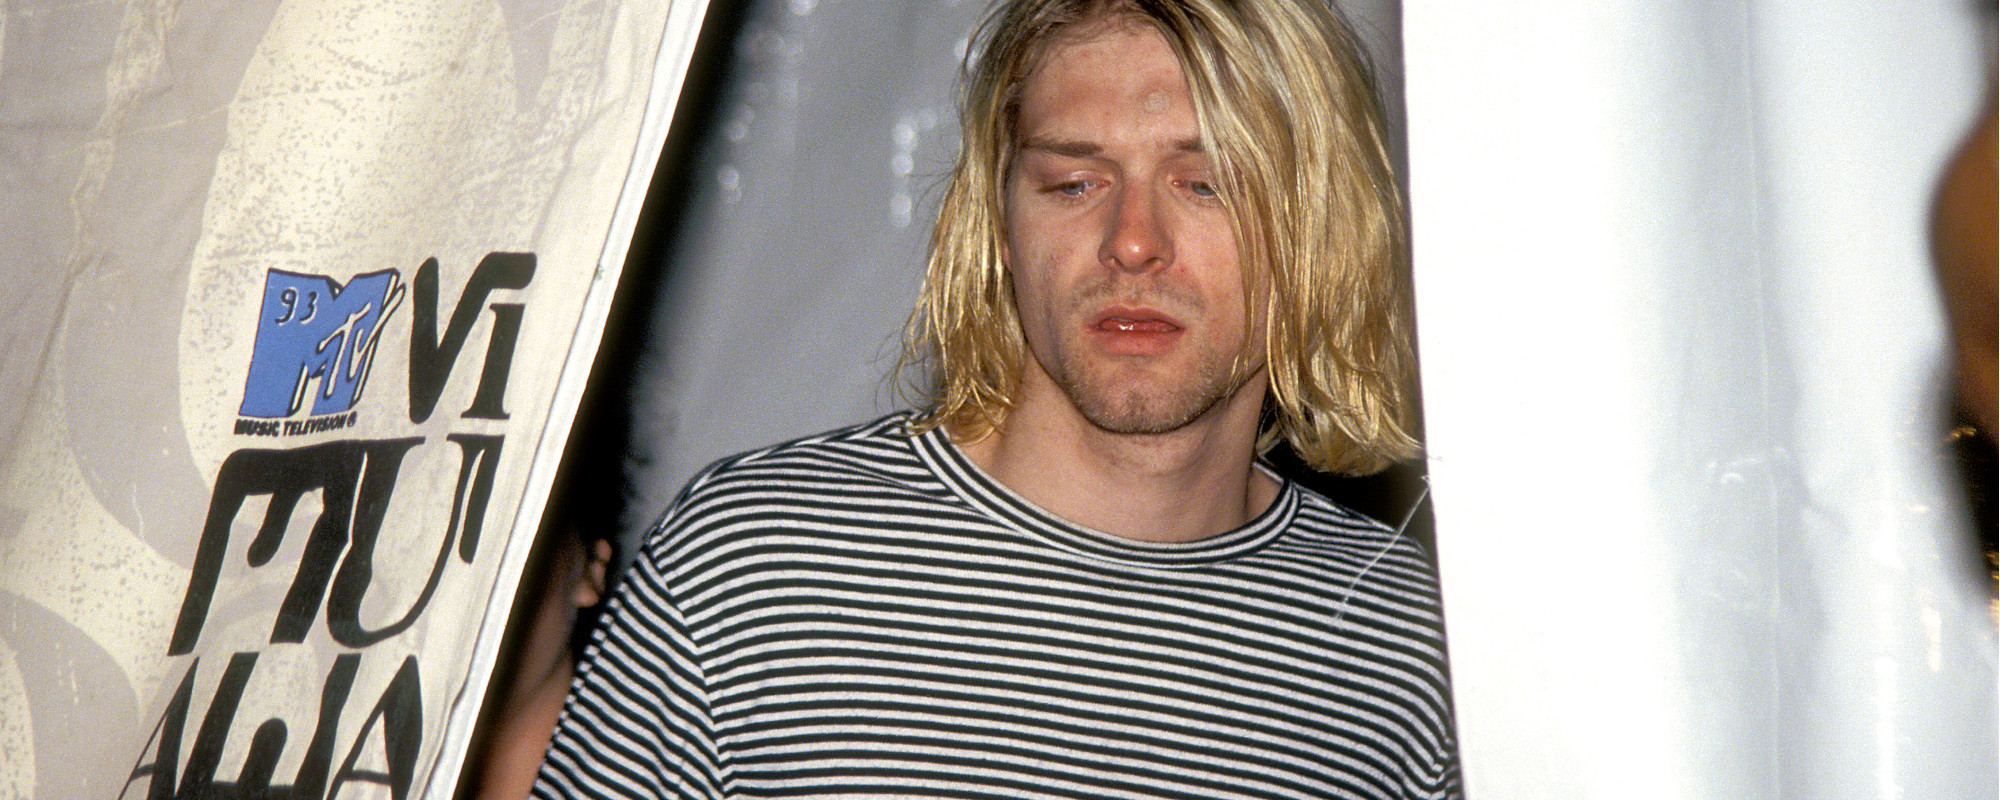 Kurt Cobain-Inspired Opera ‘Last Days’ Sets U.S. Debut